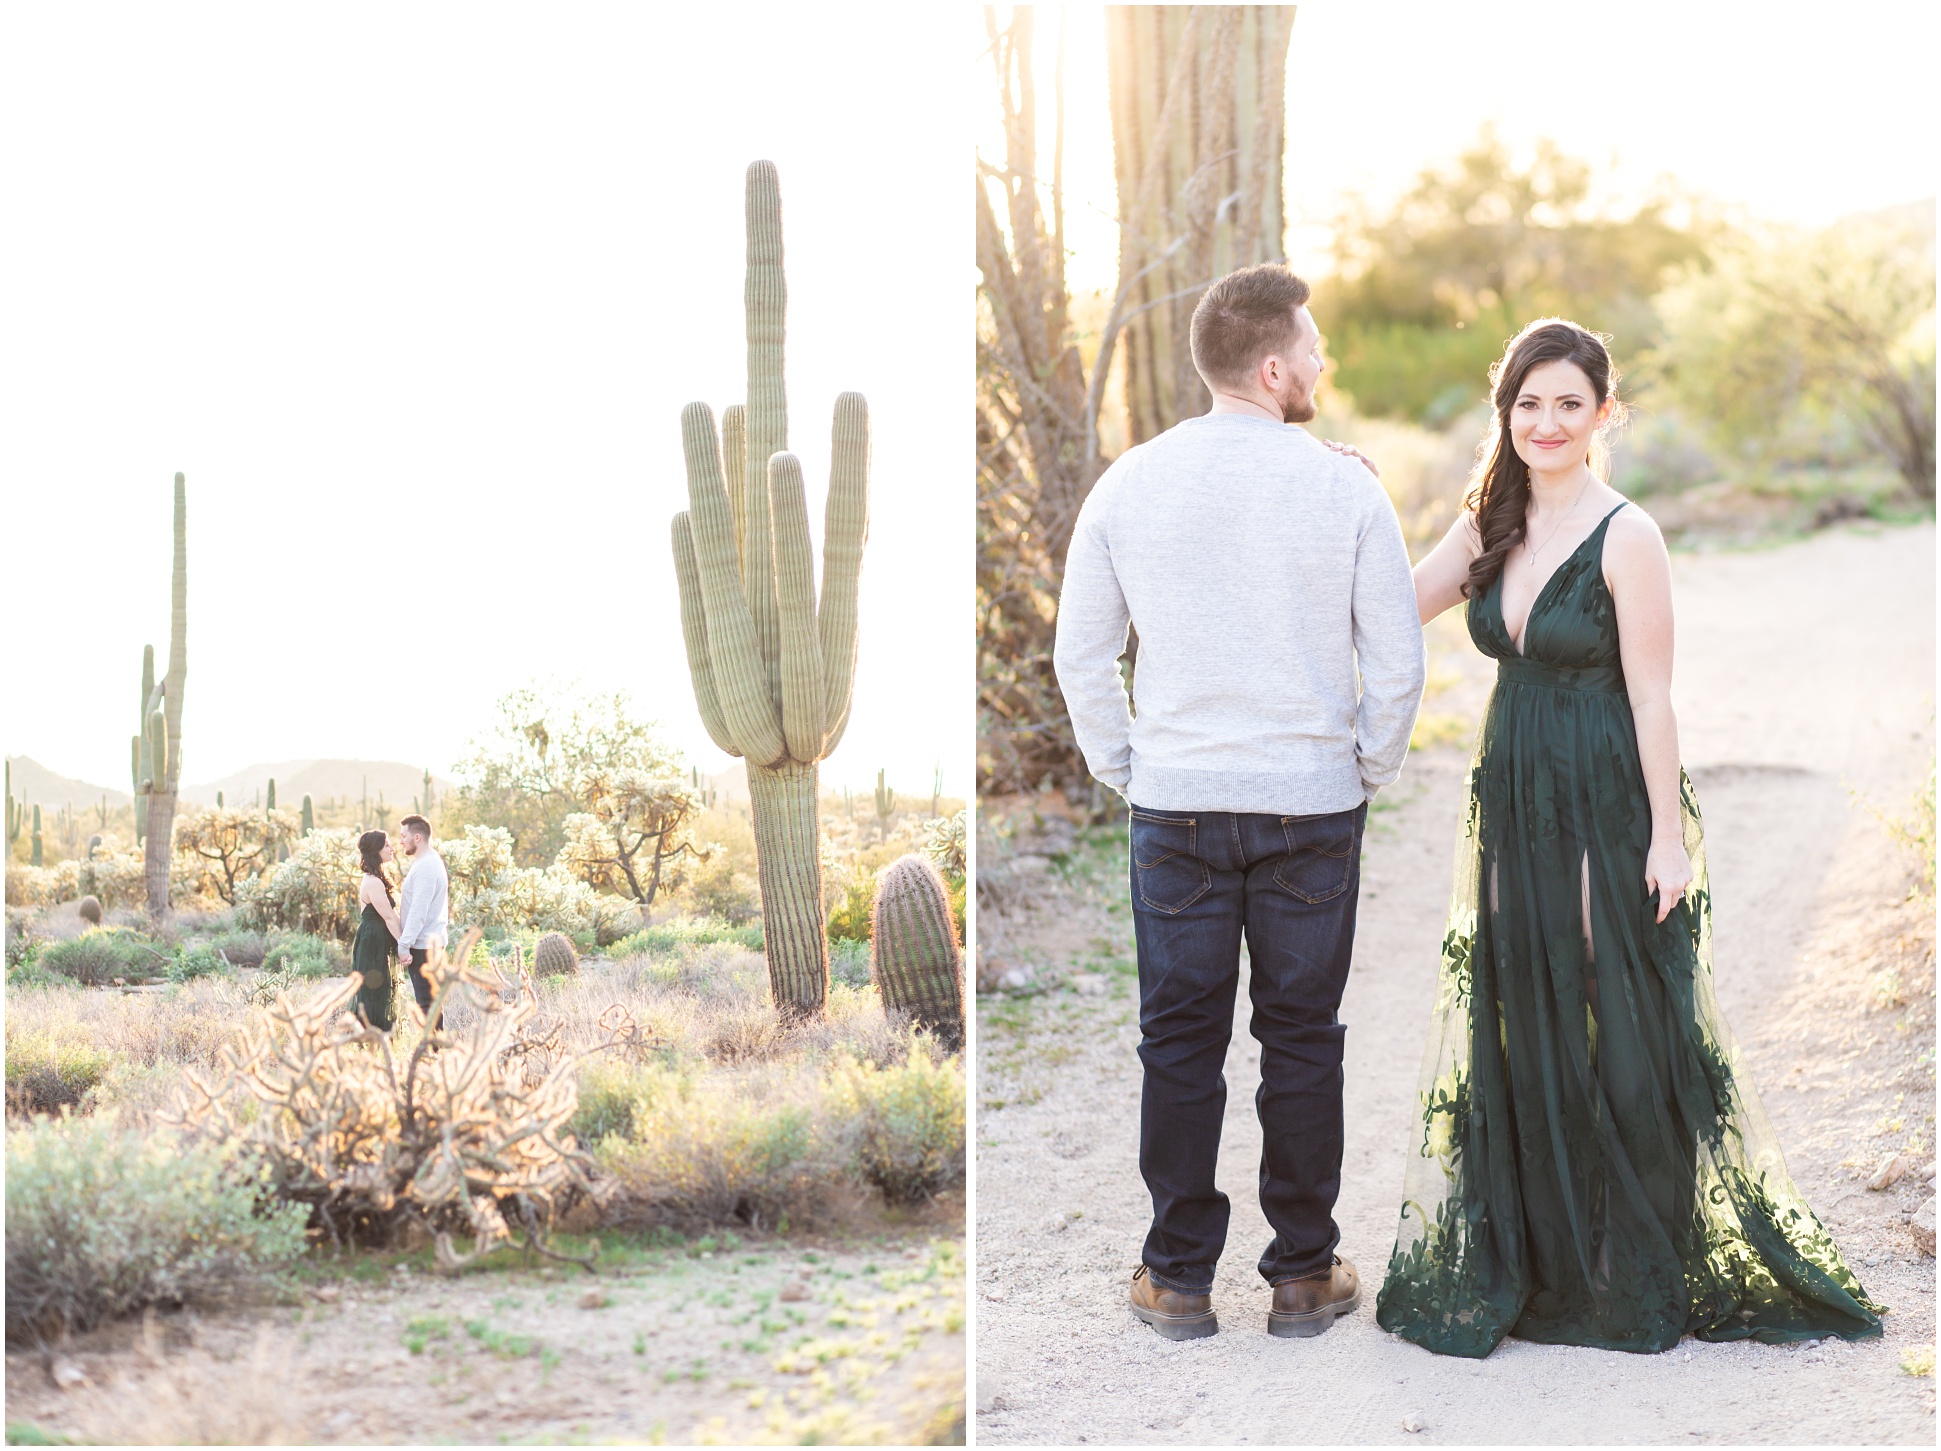 Left Image: Jake and Kaila kissing next to saguaro, Right Image: Jake and Kaila close up